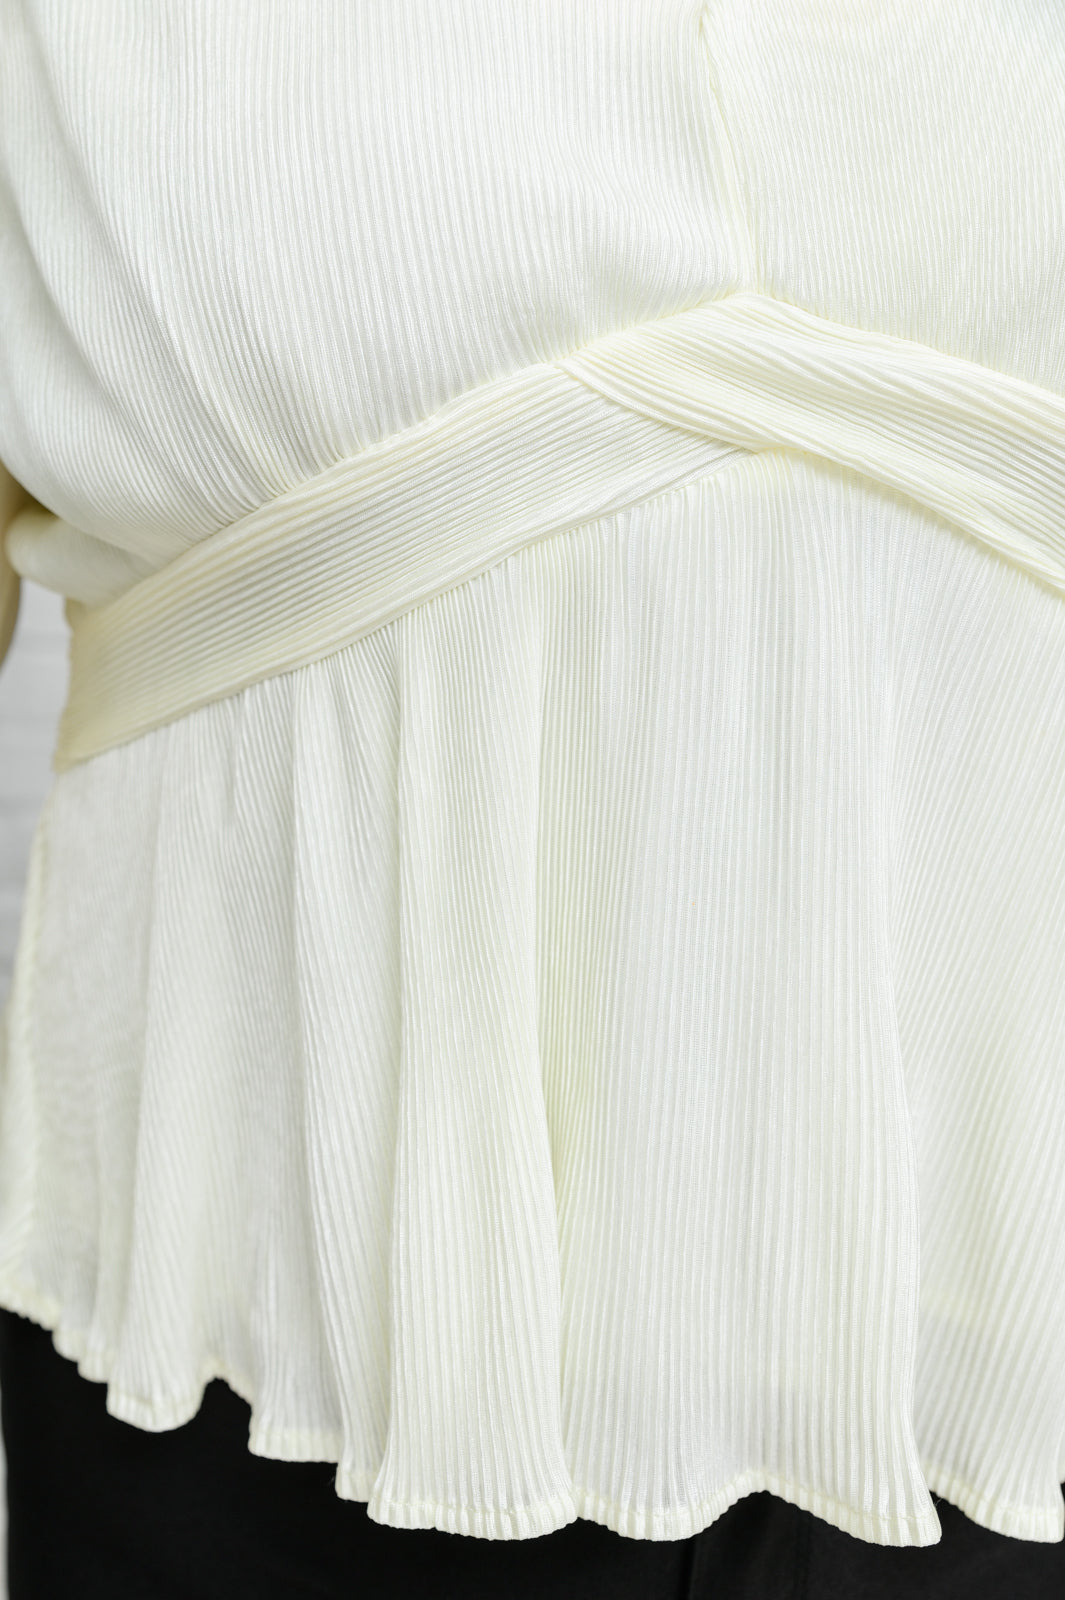 Xanidu Long Sleeve V Neck Blouse in White | S - 3XL-Long Sleeve Tops-Krush Kandy, Women's Online Fashion Boutique Located in Phoenix, Arizona (Scottsdale Area)